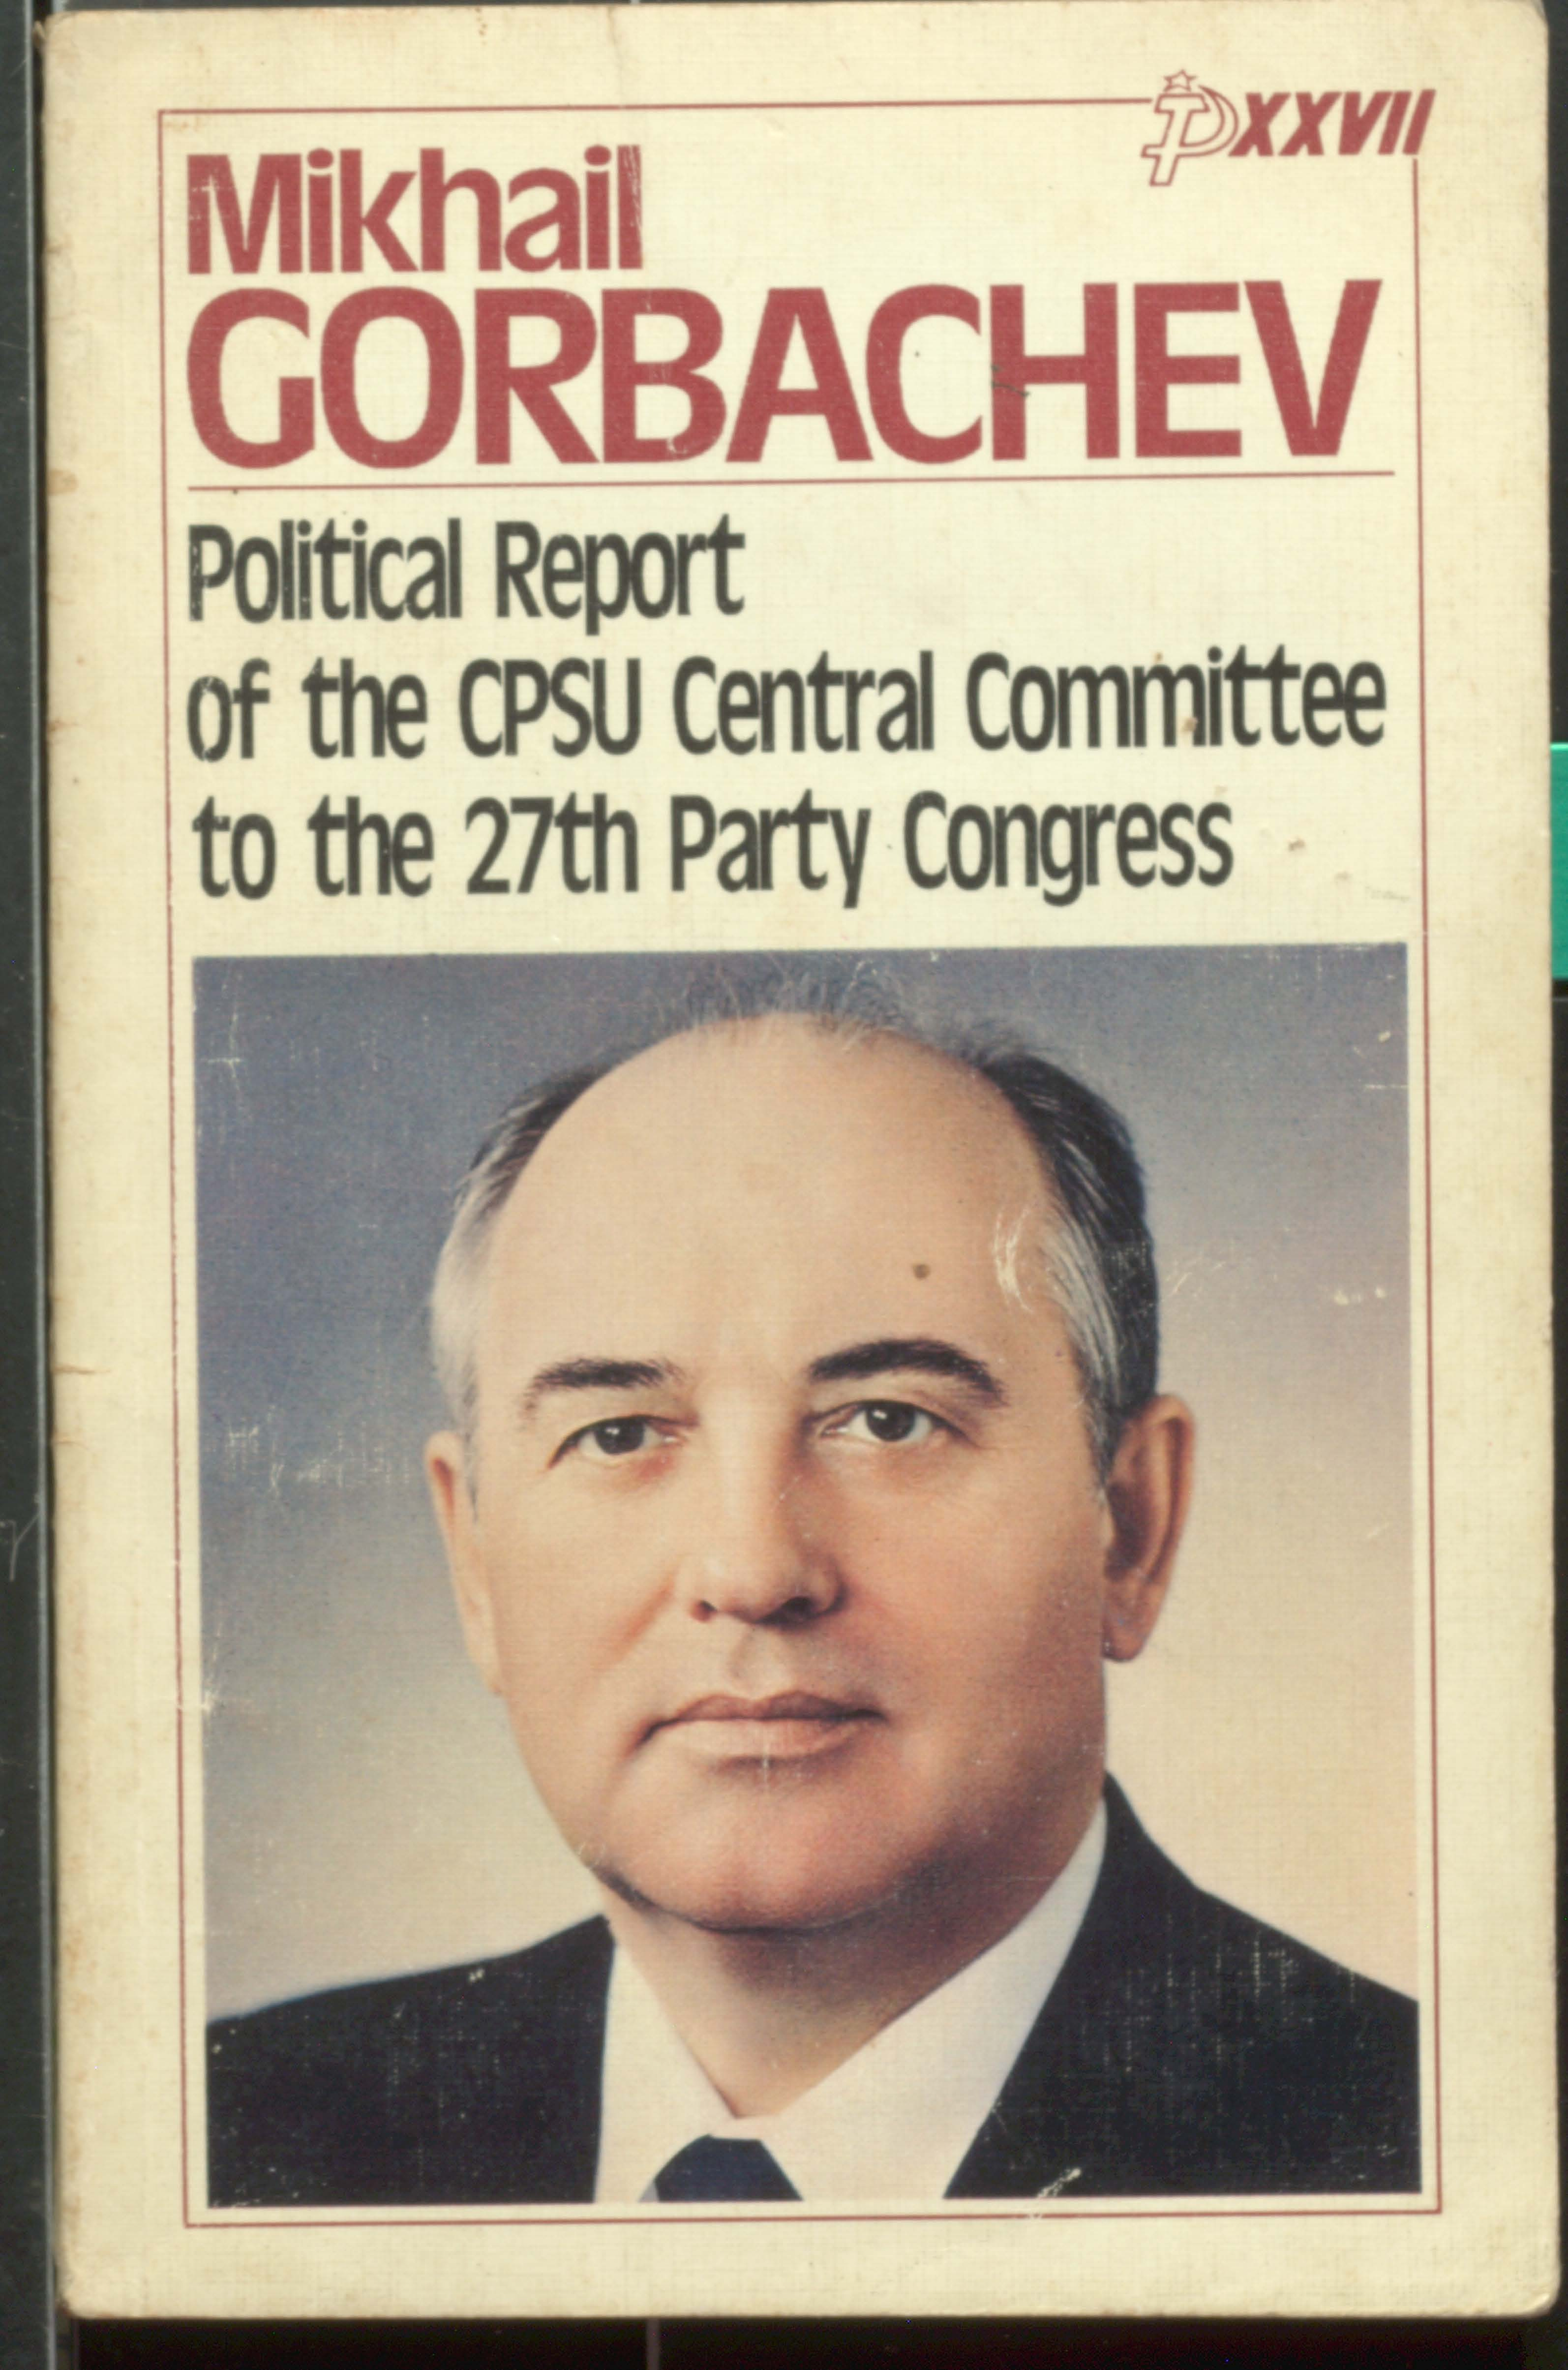 Mikhail gorbachev xxvII